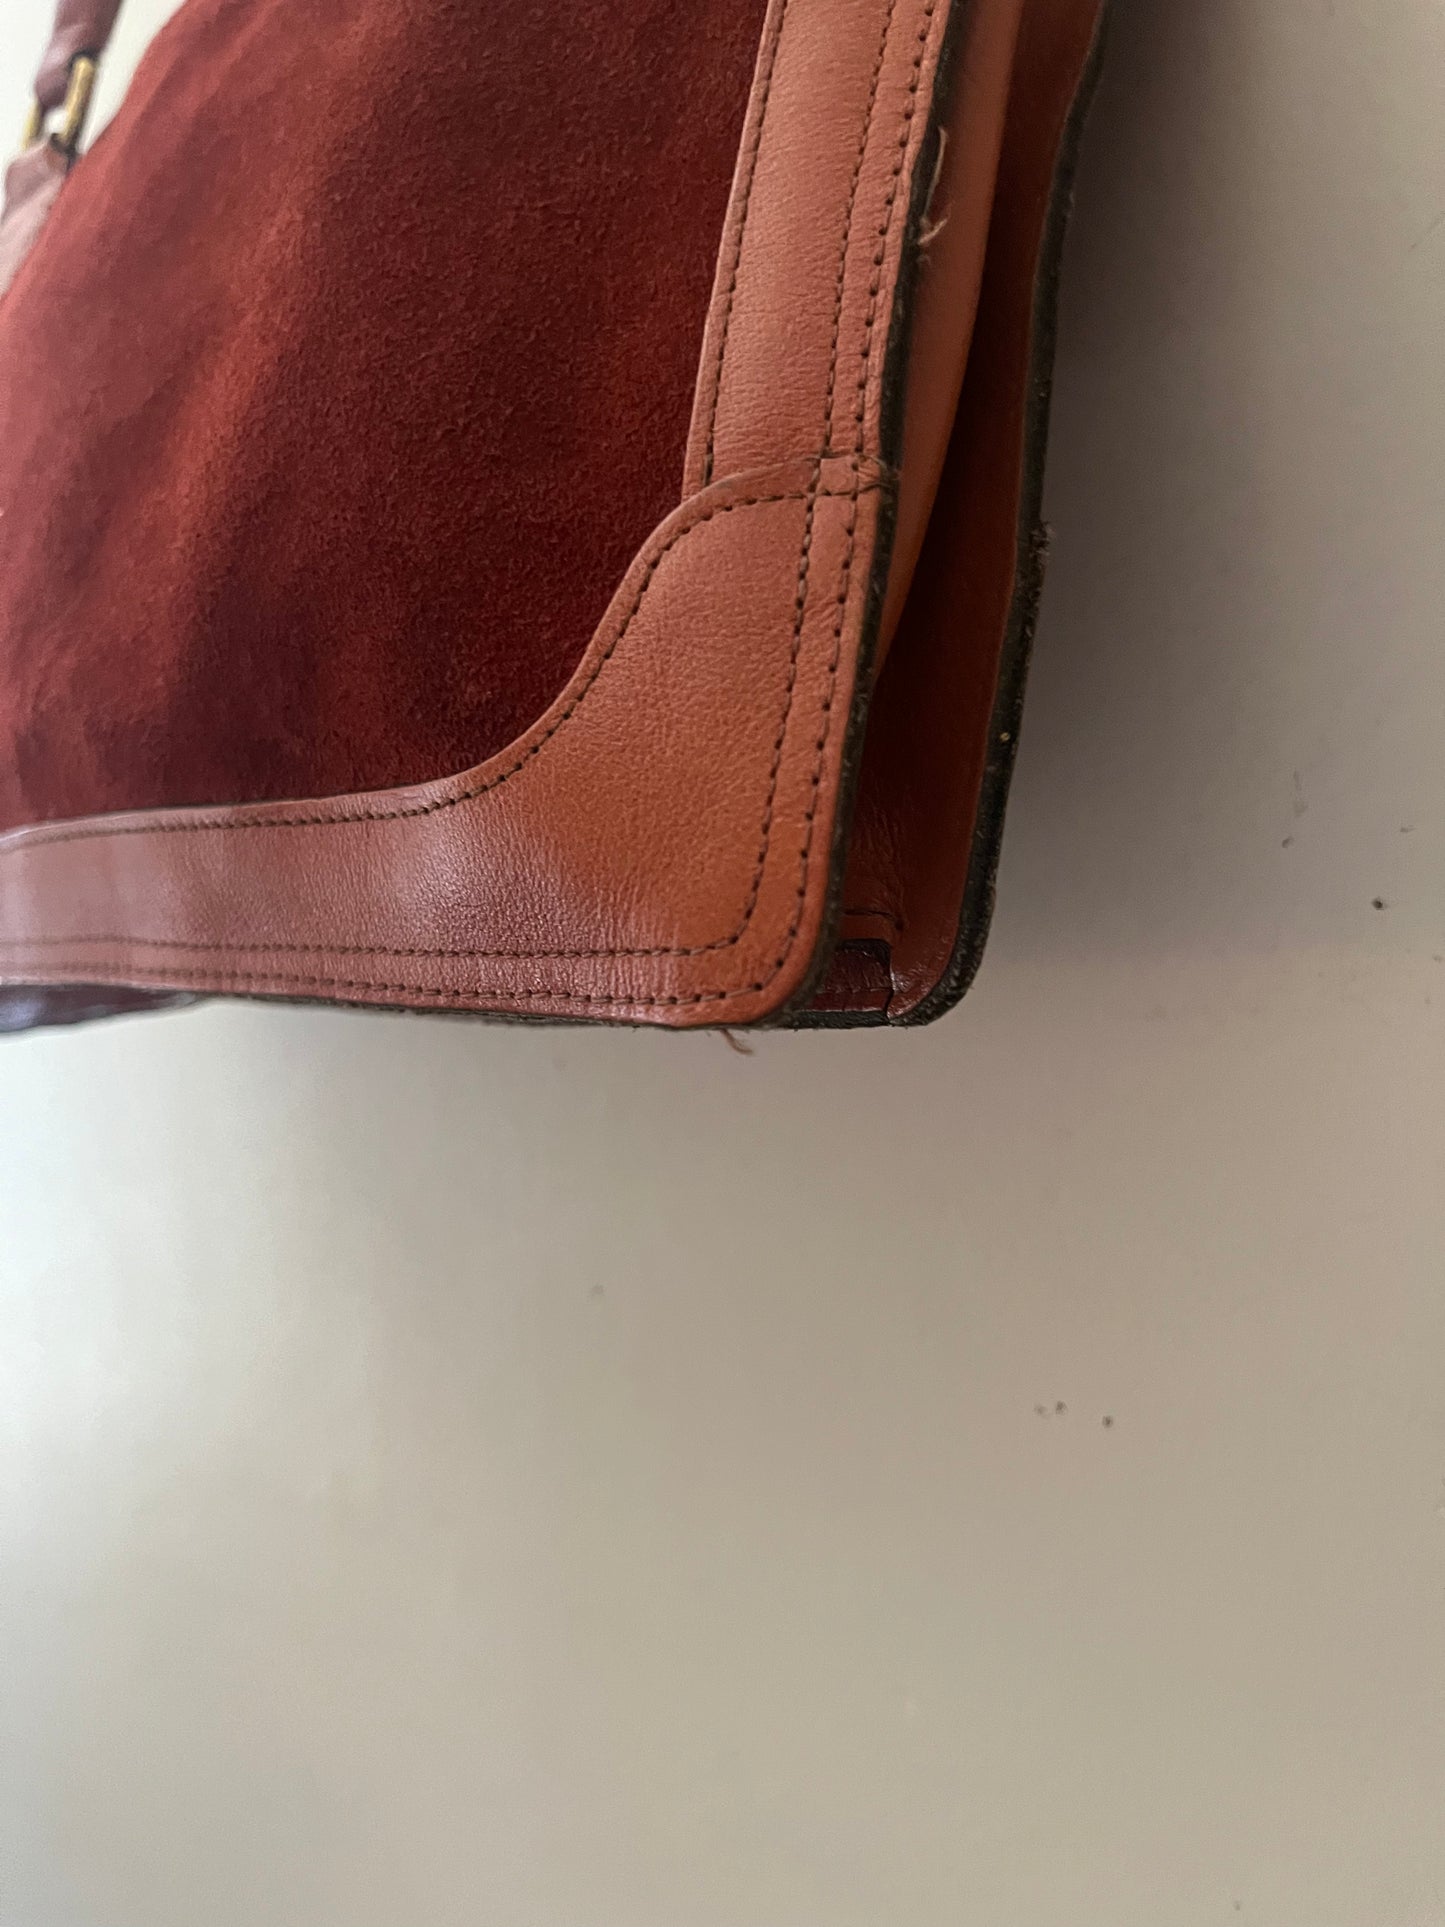 Rust Suede Leather Handbag